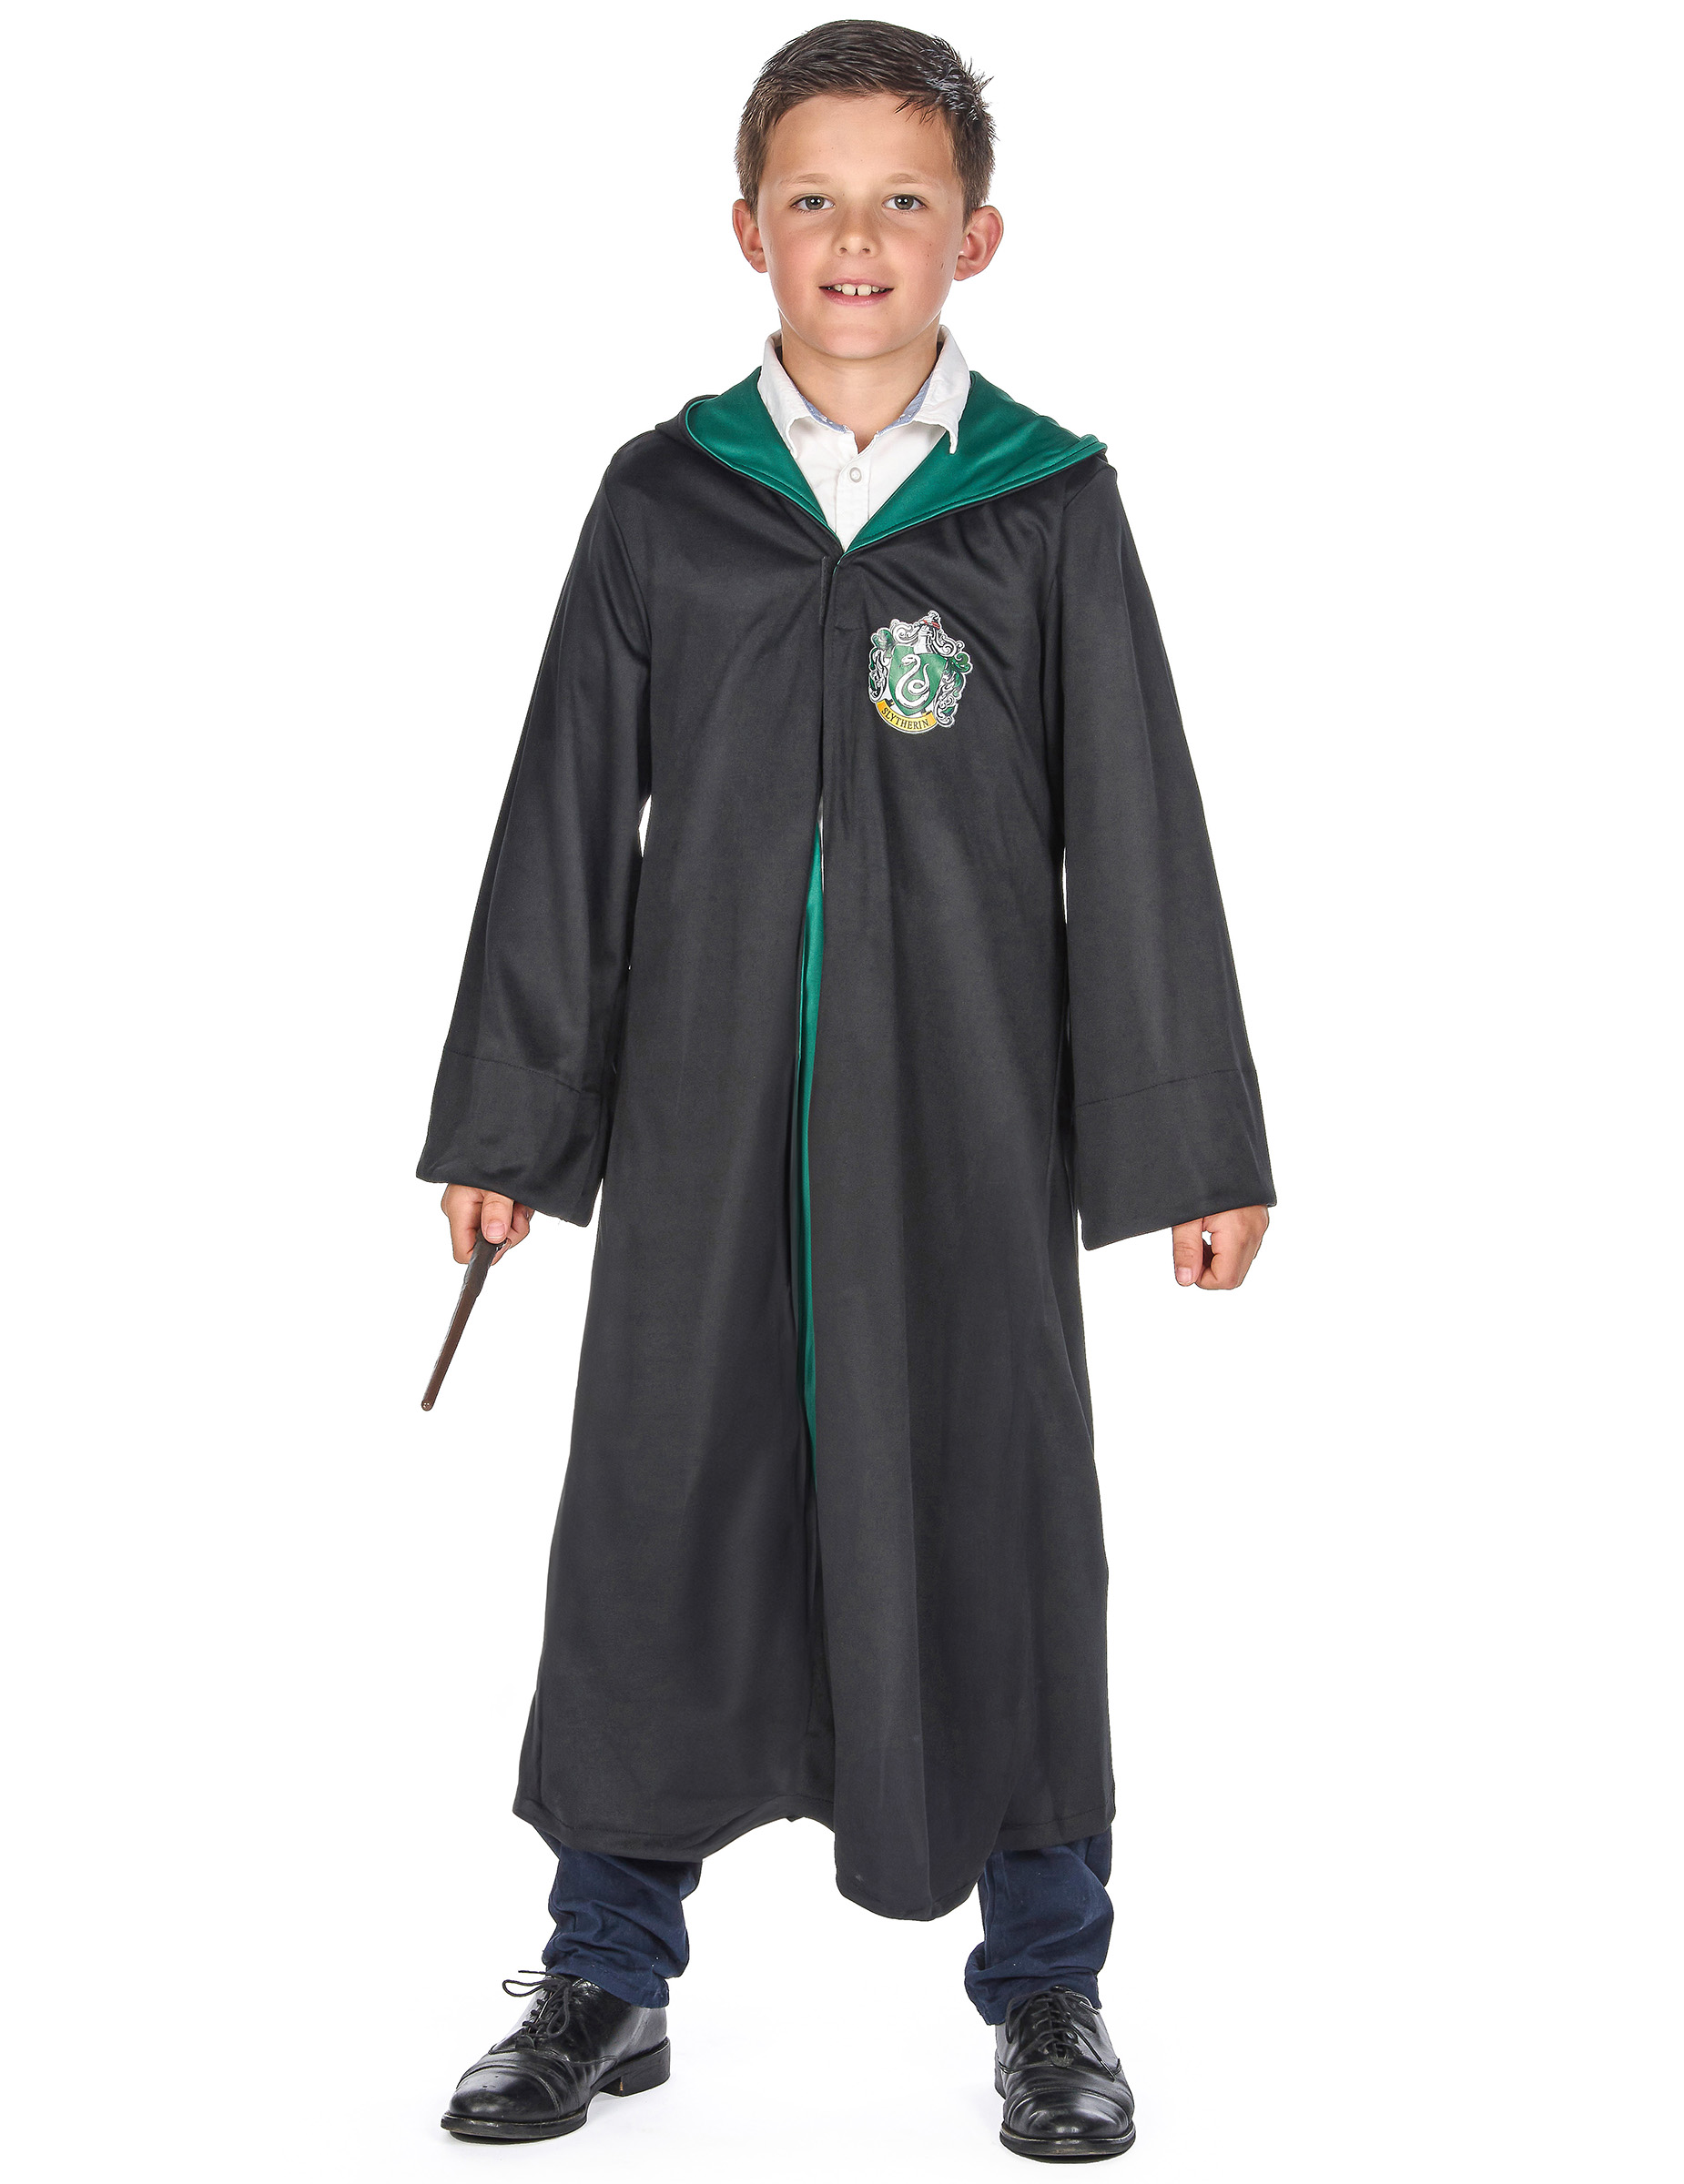 Offizielles Slytherin-Kinderkostüm Harry Potter schwarz-grün von RUBIES FRANCE